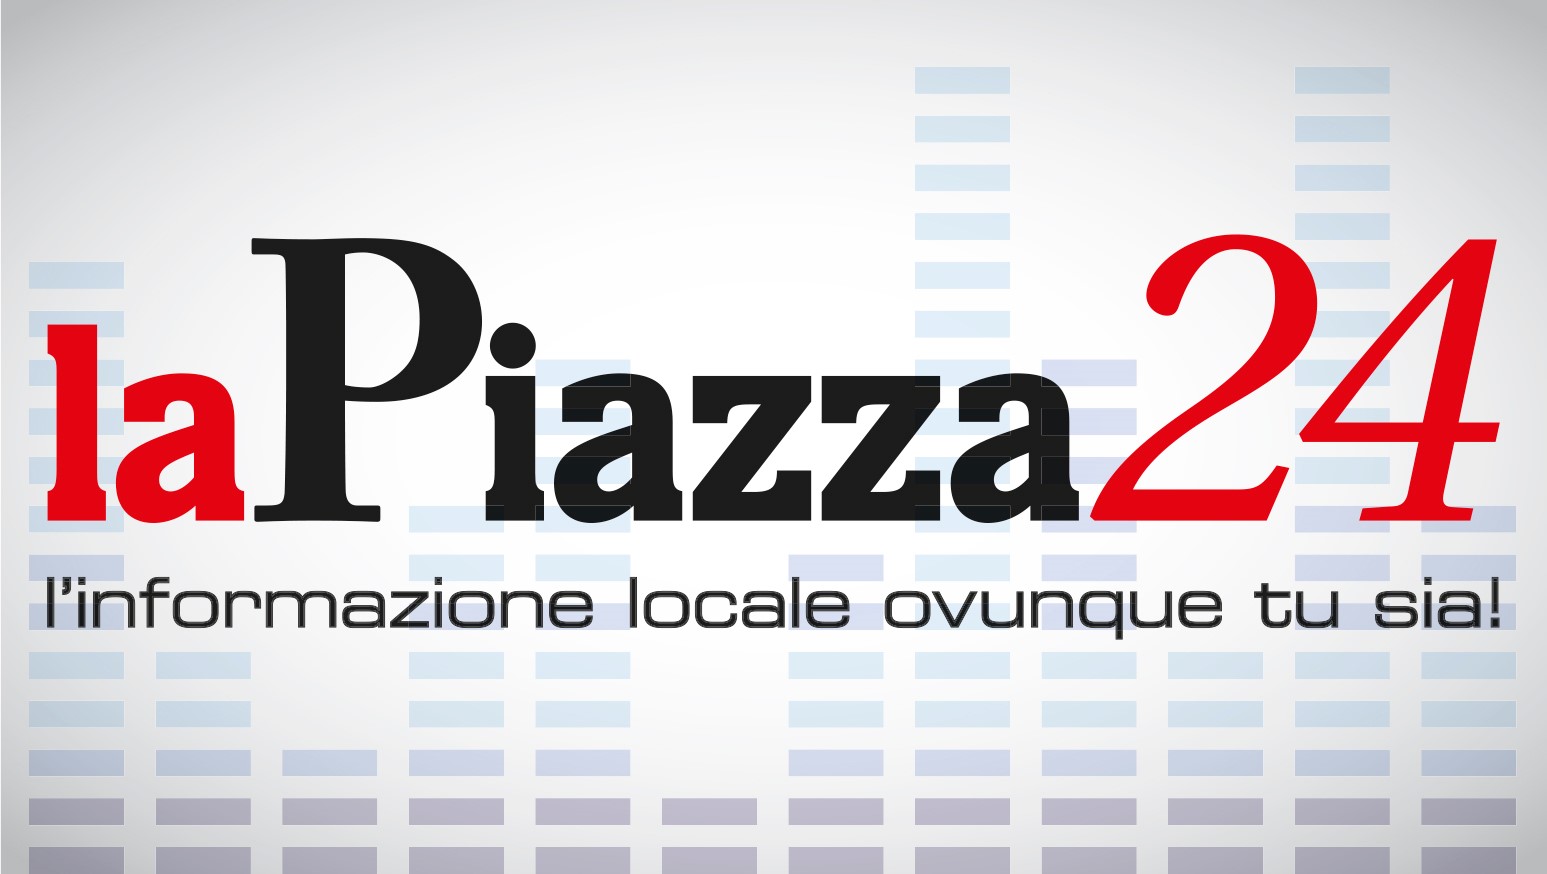 LaPiazza24